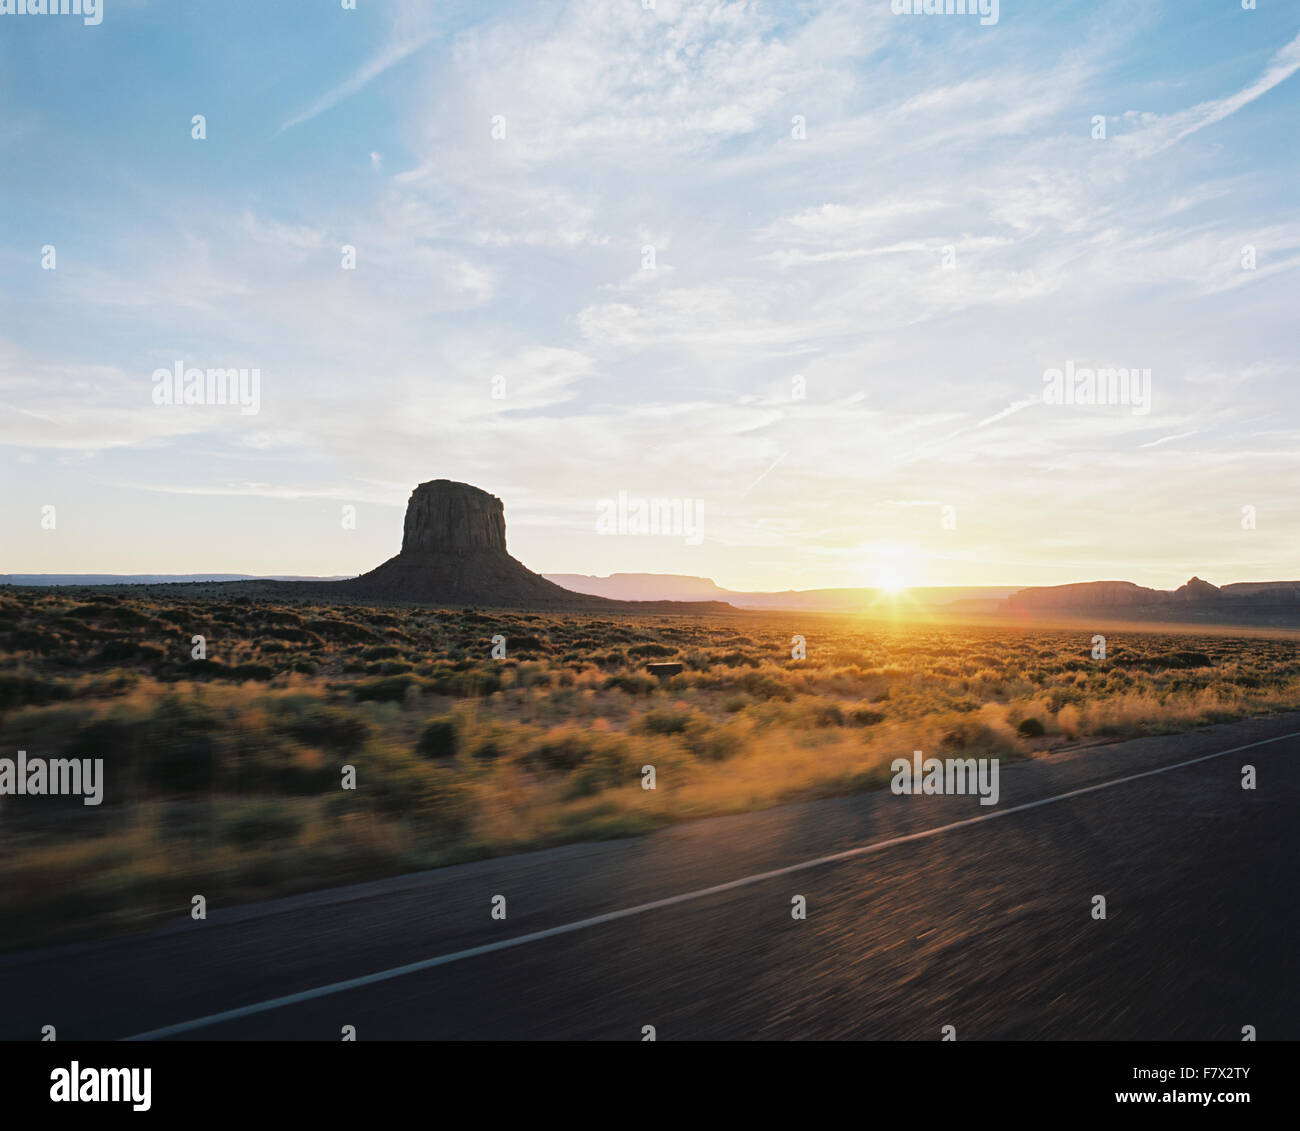 Monument valley, Arizona Utah border, United States Stock Photo